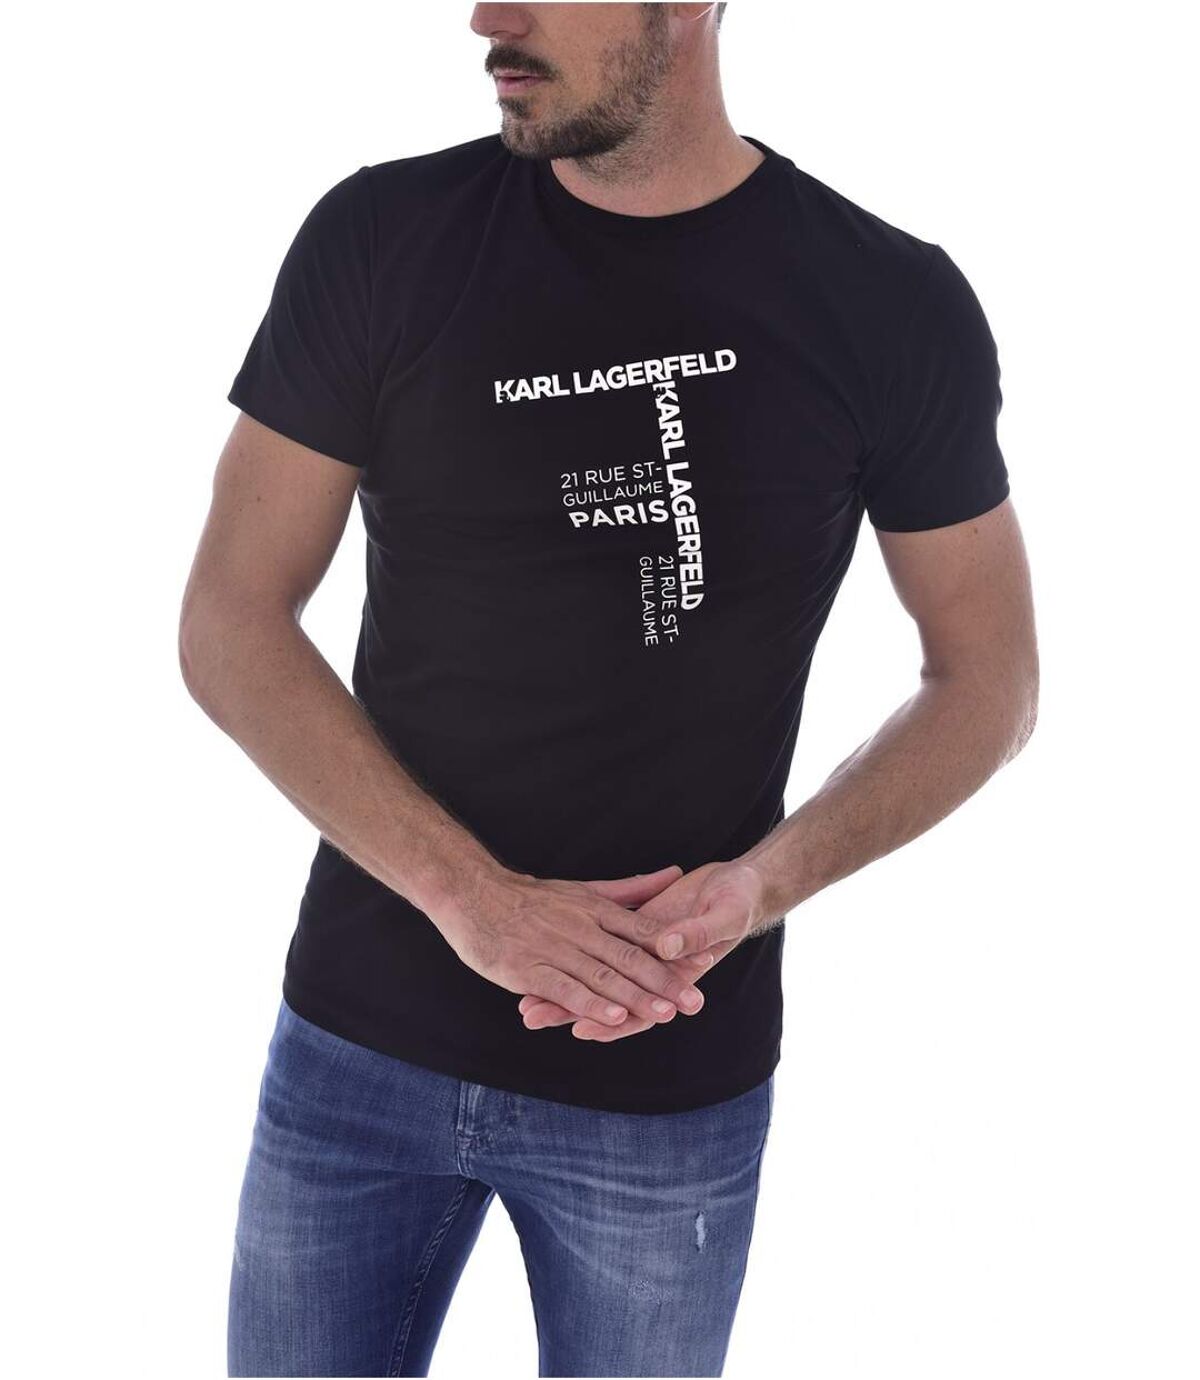 Tee shirt iconique en coton   -  Karl lagerfeld - Homme